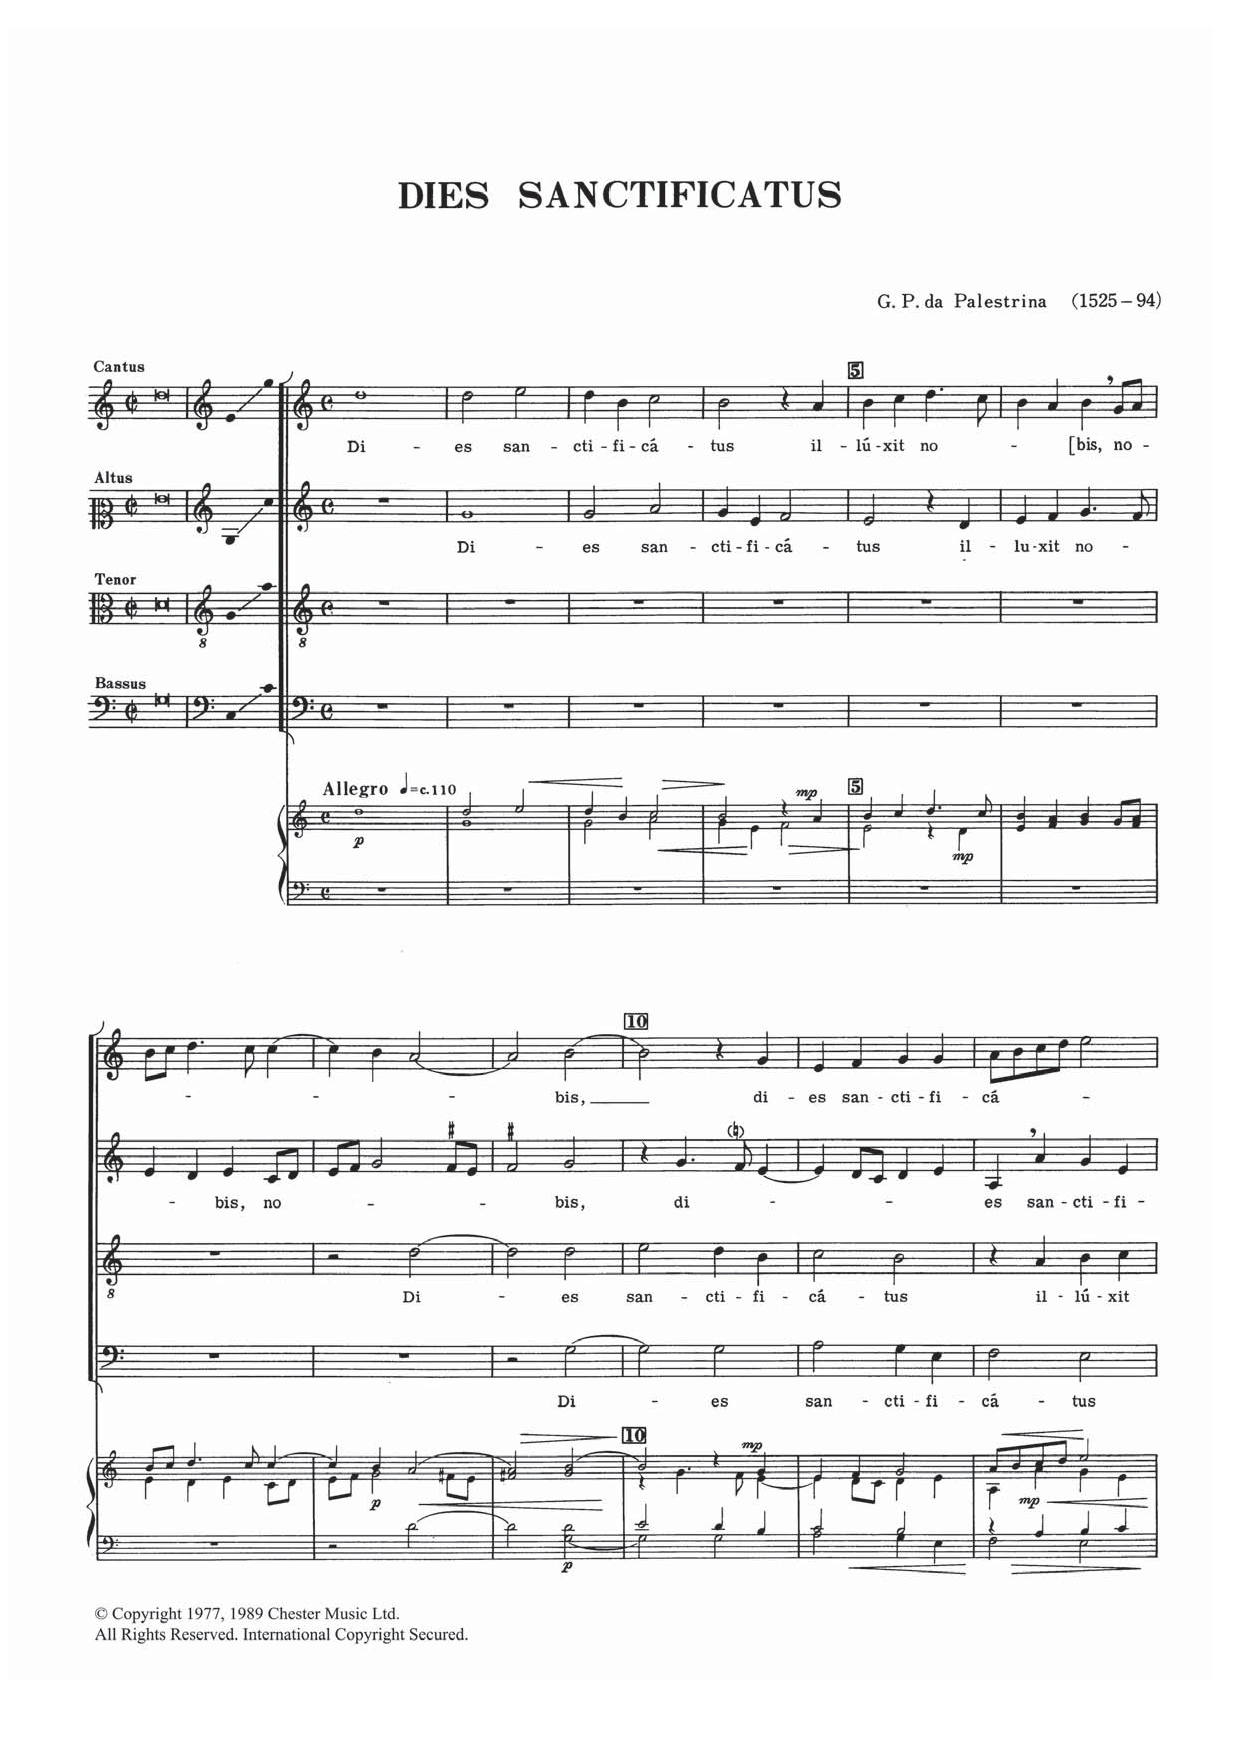 Giovanni Palestrina Dies Sanctificatus Sheet Music Notes & Chords for SATB - Download or Print PDF